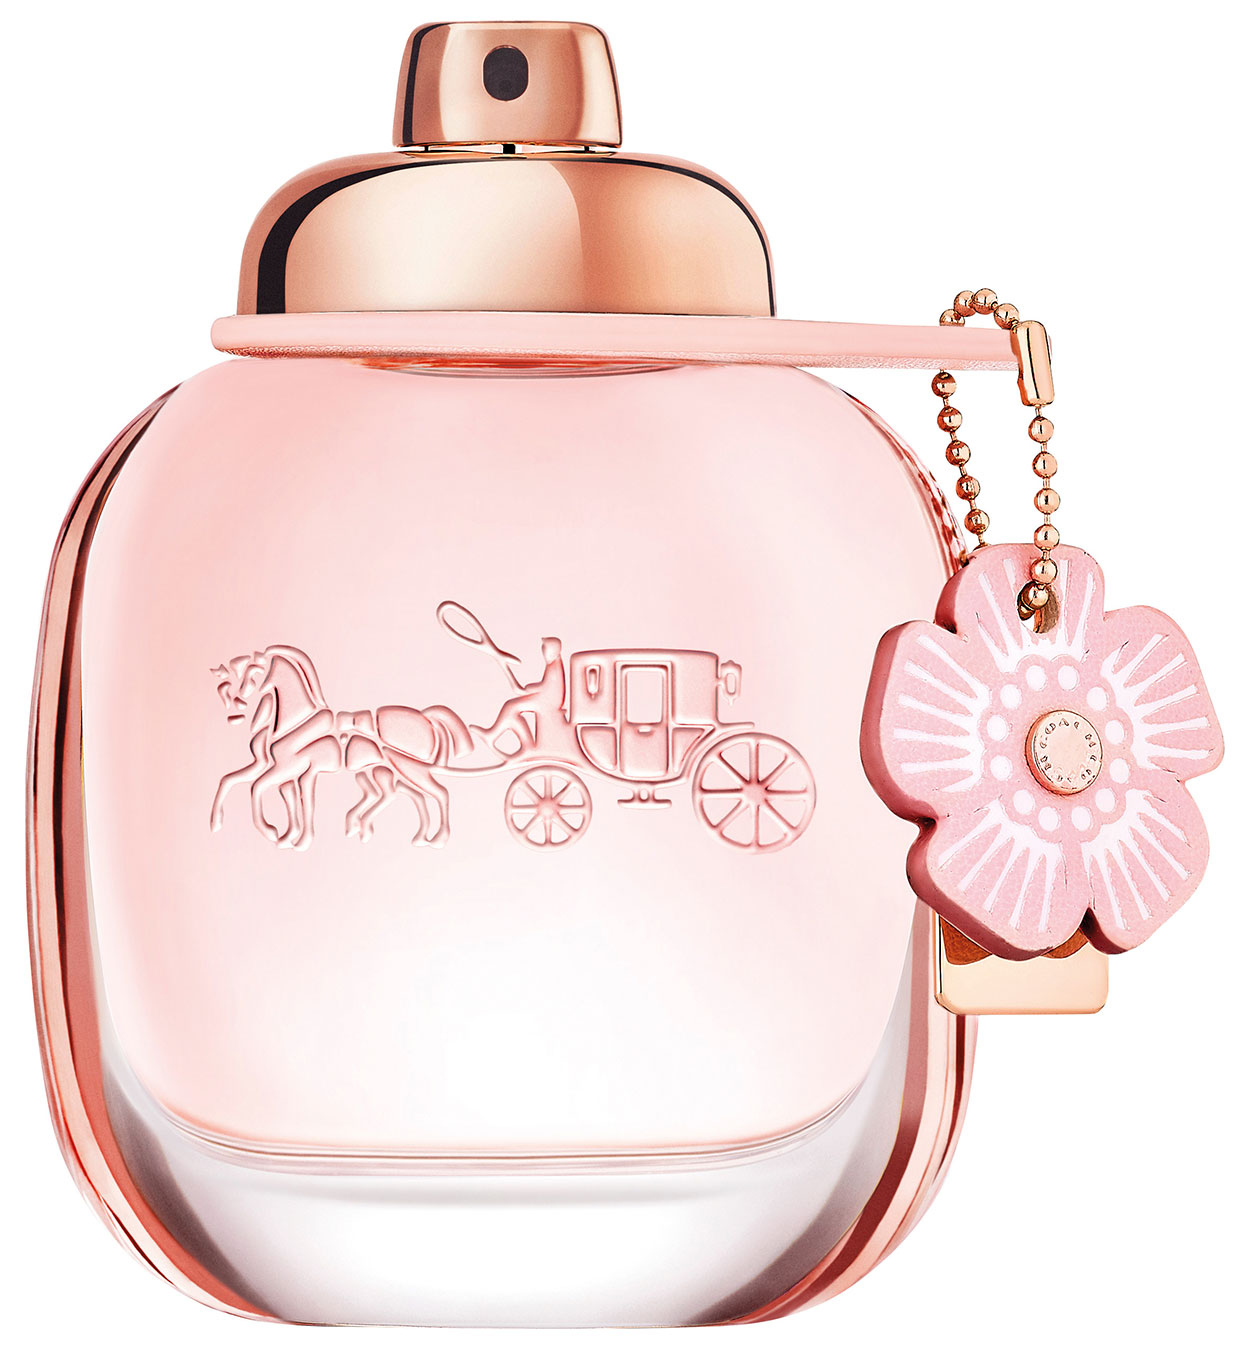 Coach Floral Coach Floral Perfume - new tea rose scent